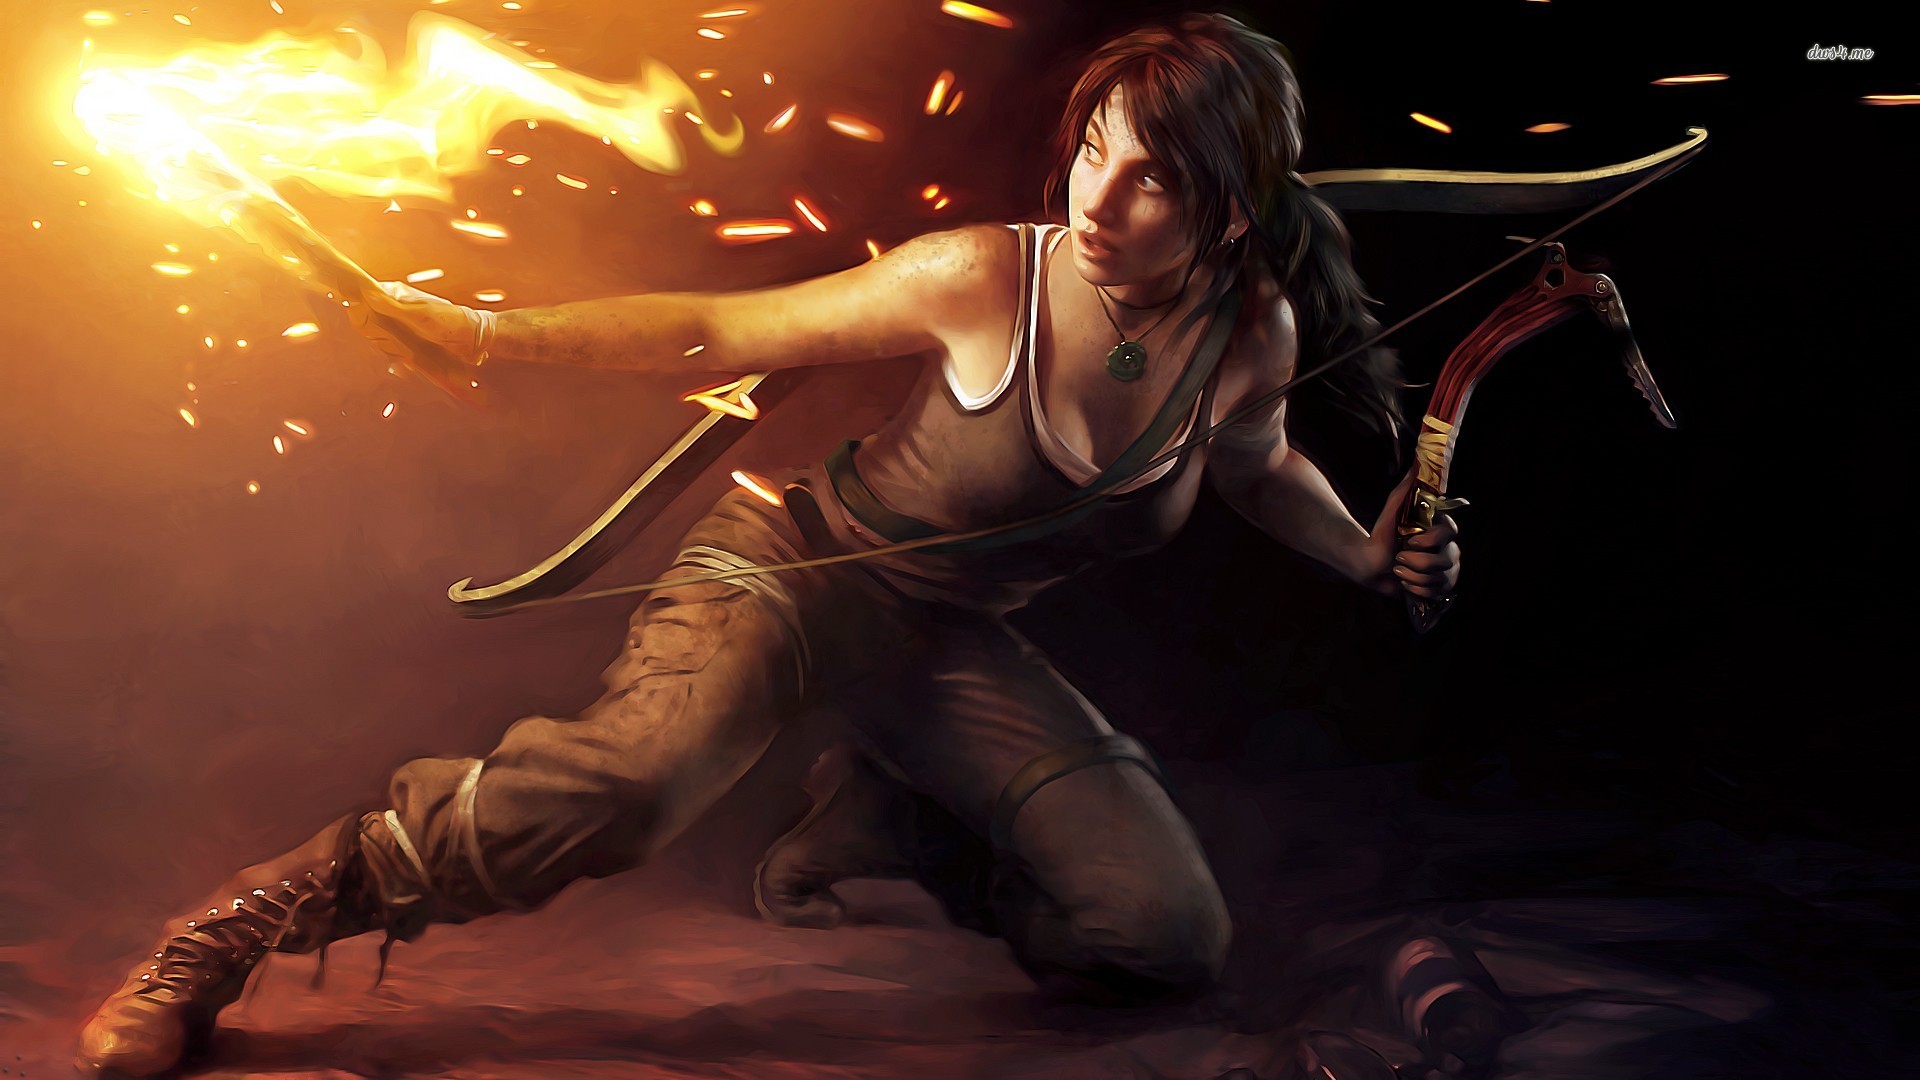 Tomb Raider Hd Wallpaper Background Image 1920x1080 9379